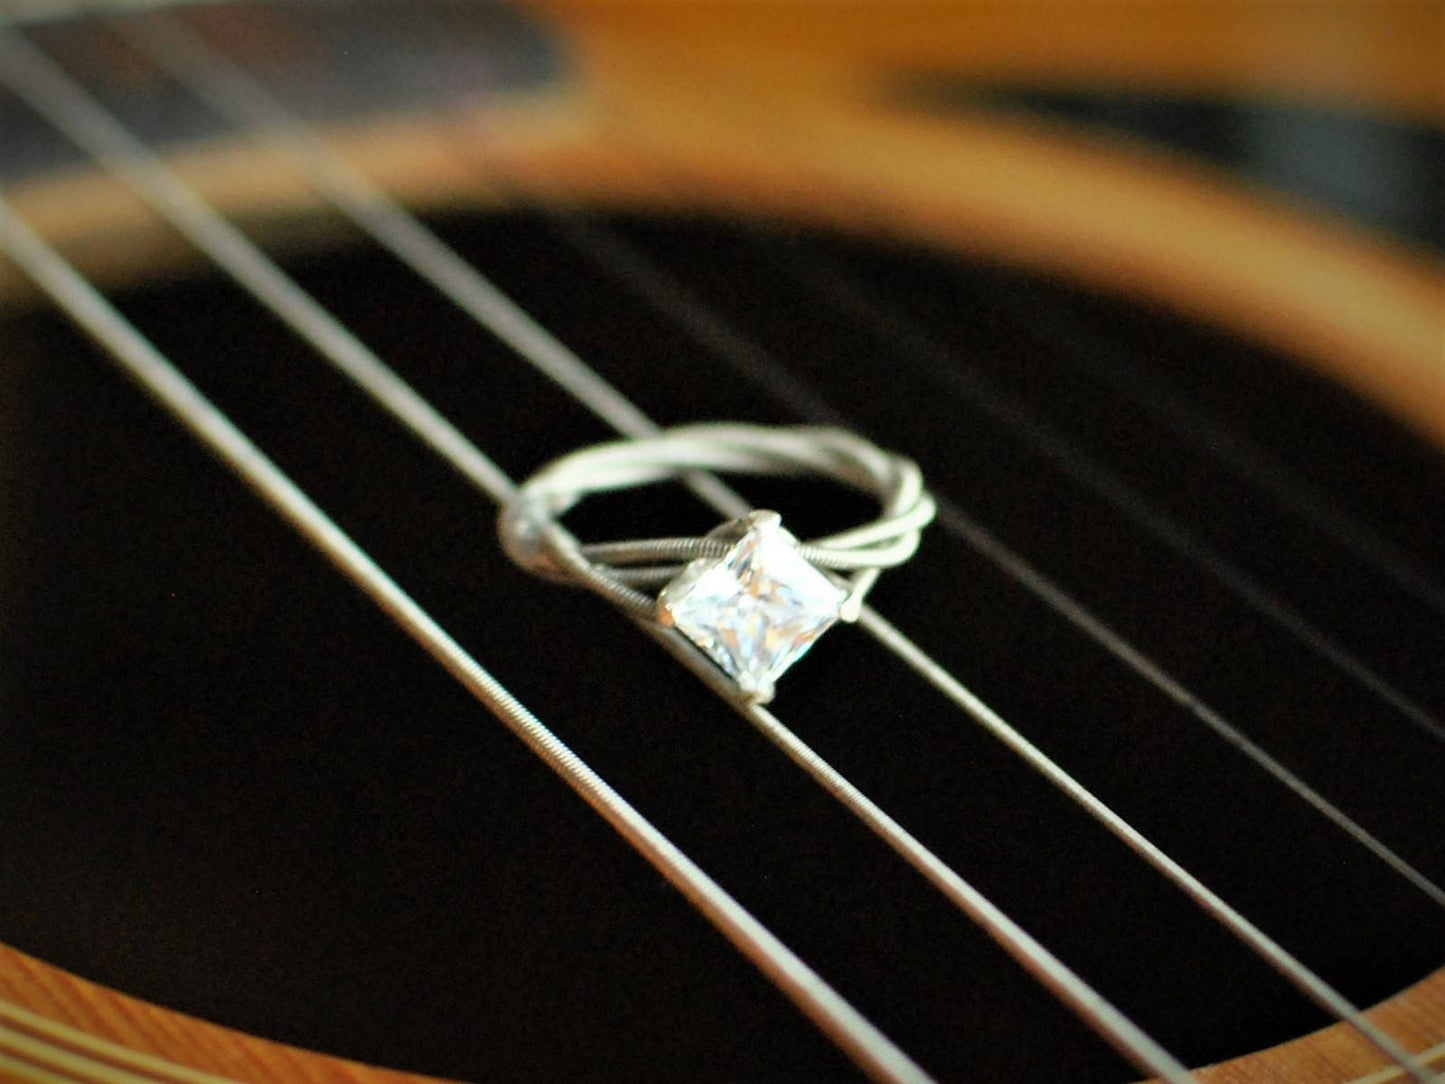 Guitar String Engagement Ring, Princess Cut Engagement Ring, Guitar String Jewelry, Unique Engagement Ring, Guitar Gifts, Wedding Ring